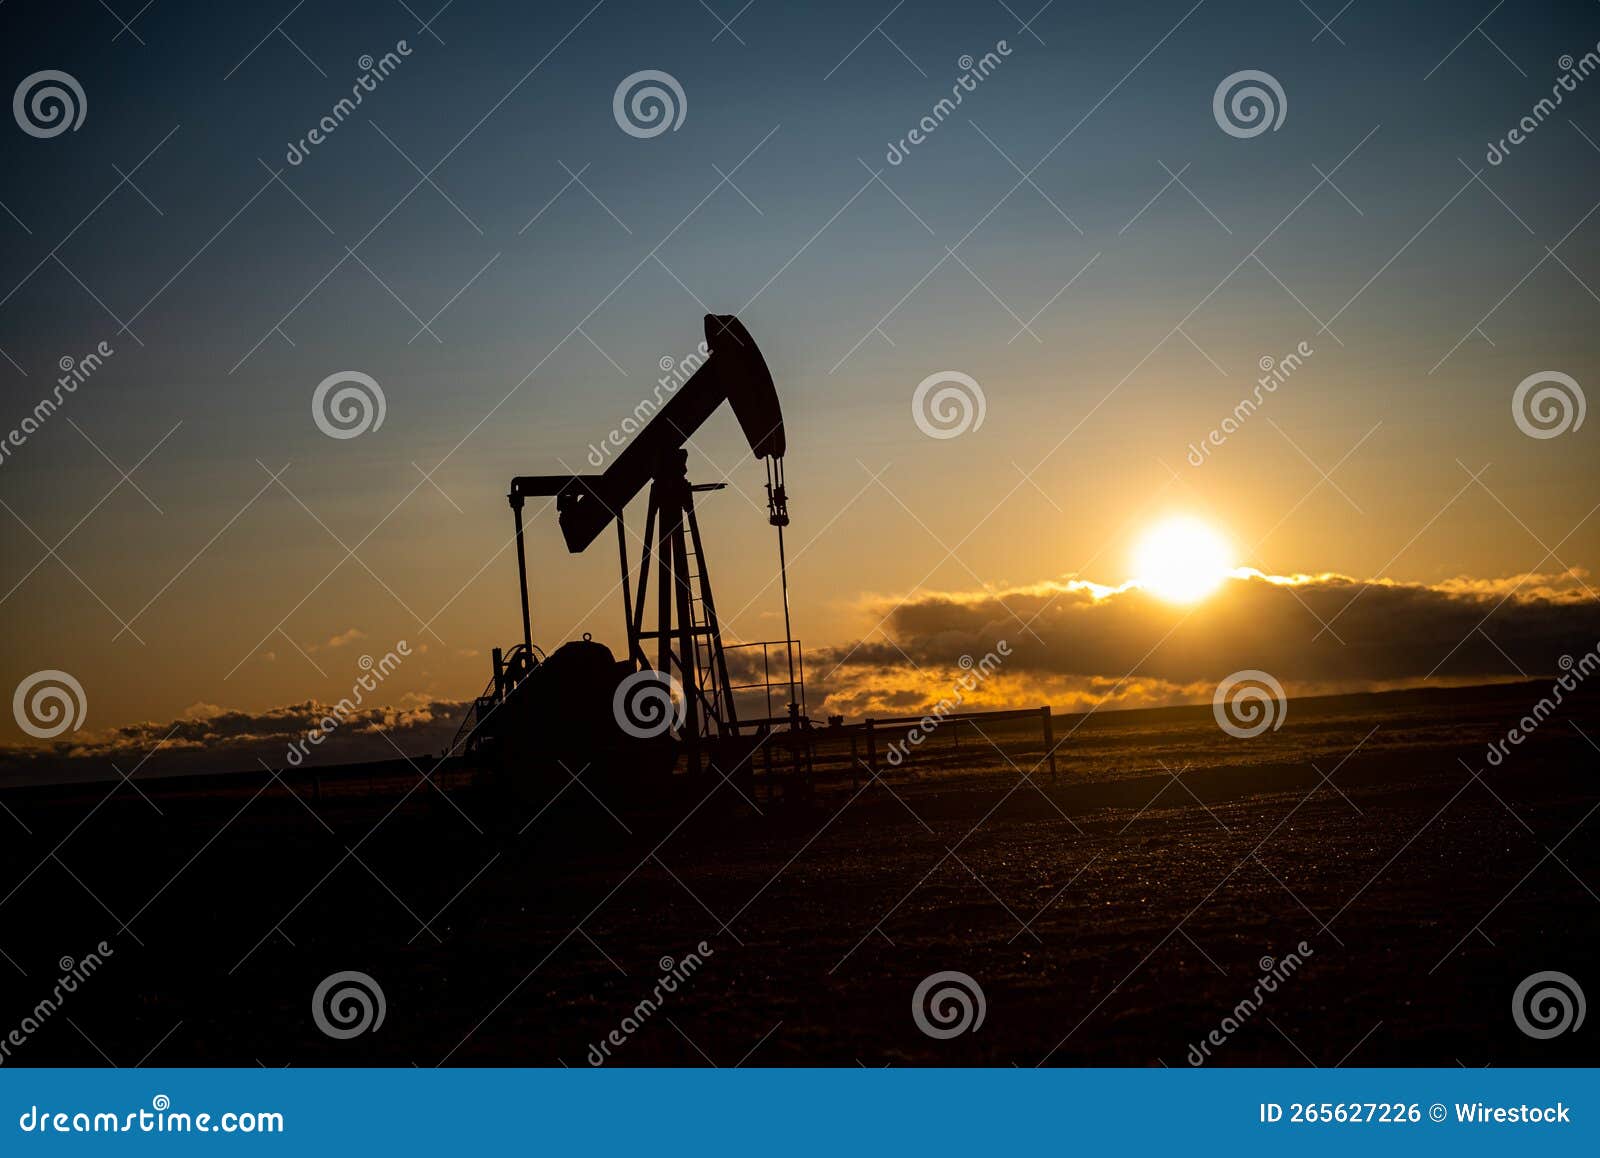 oil extraction machine